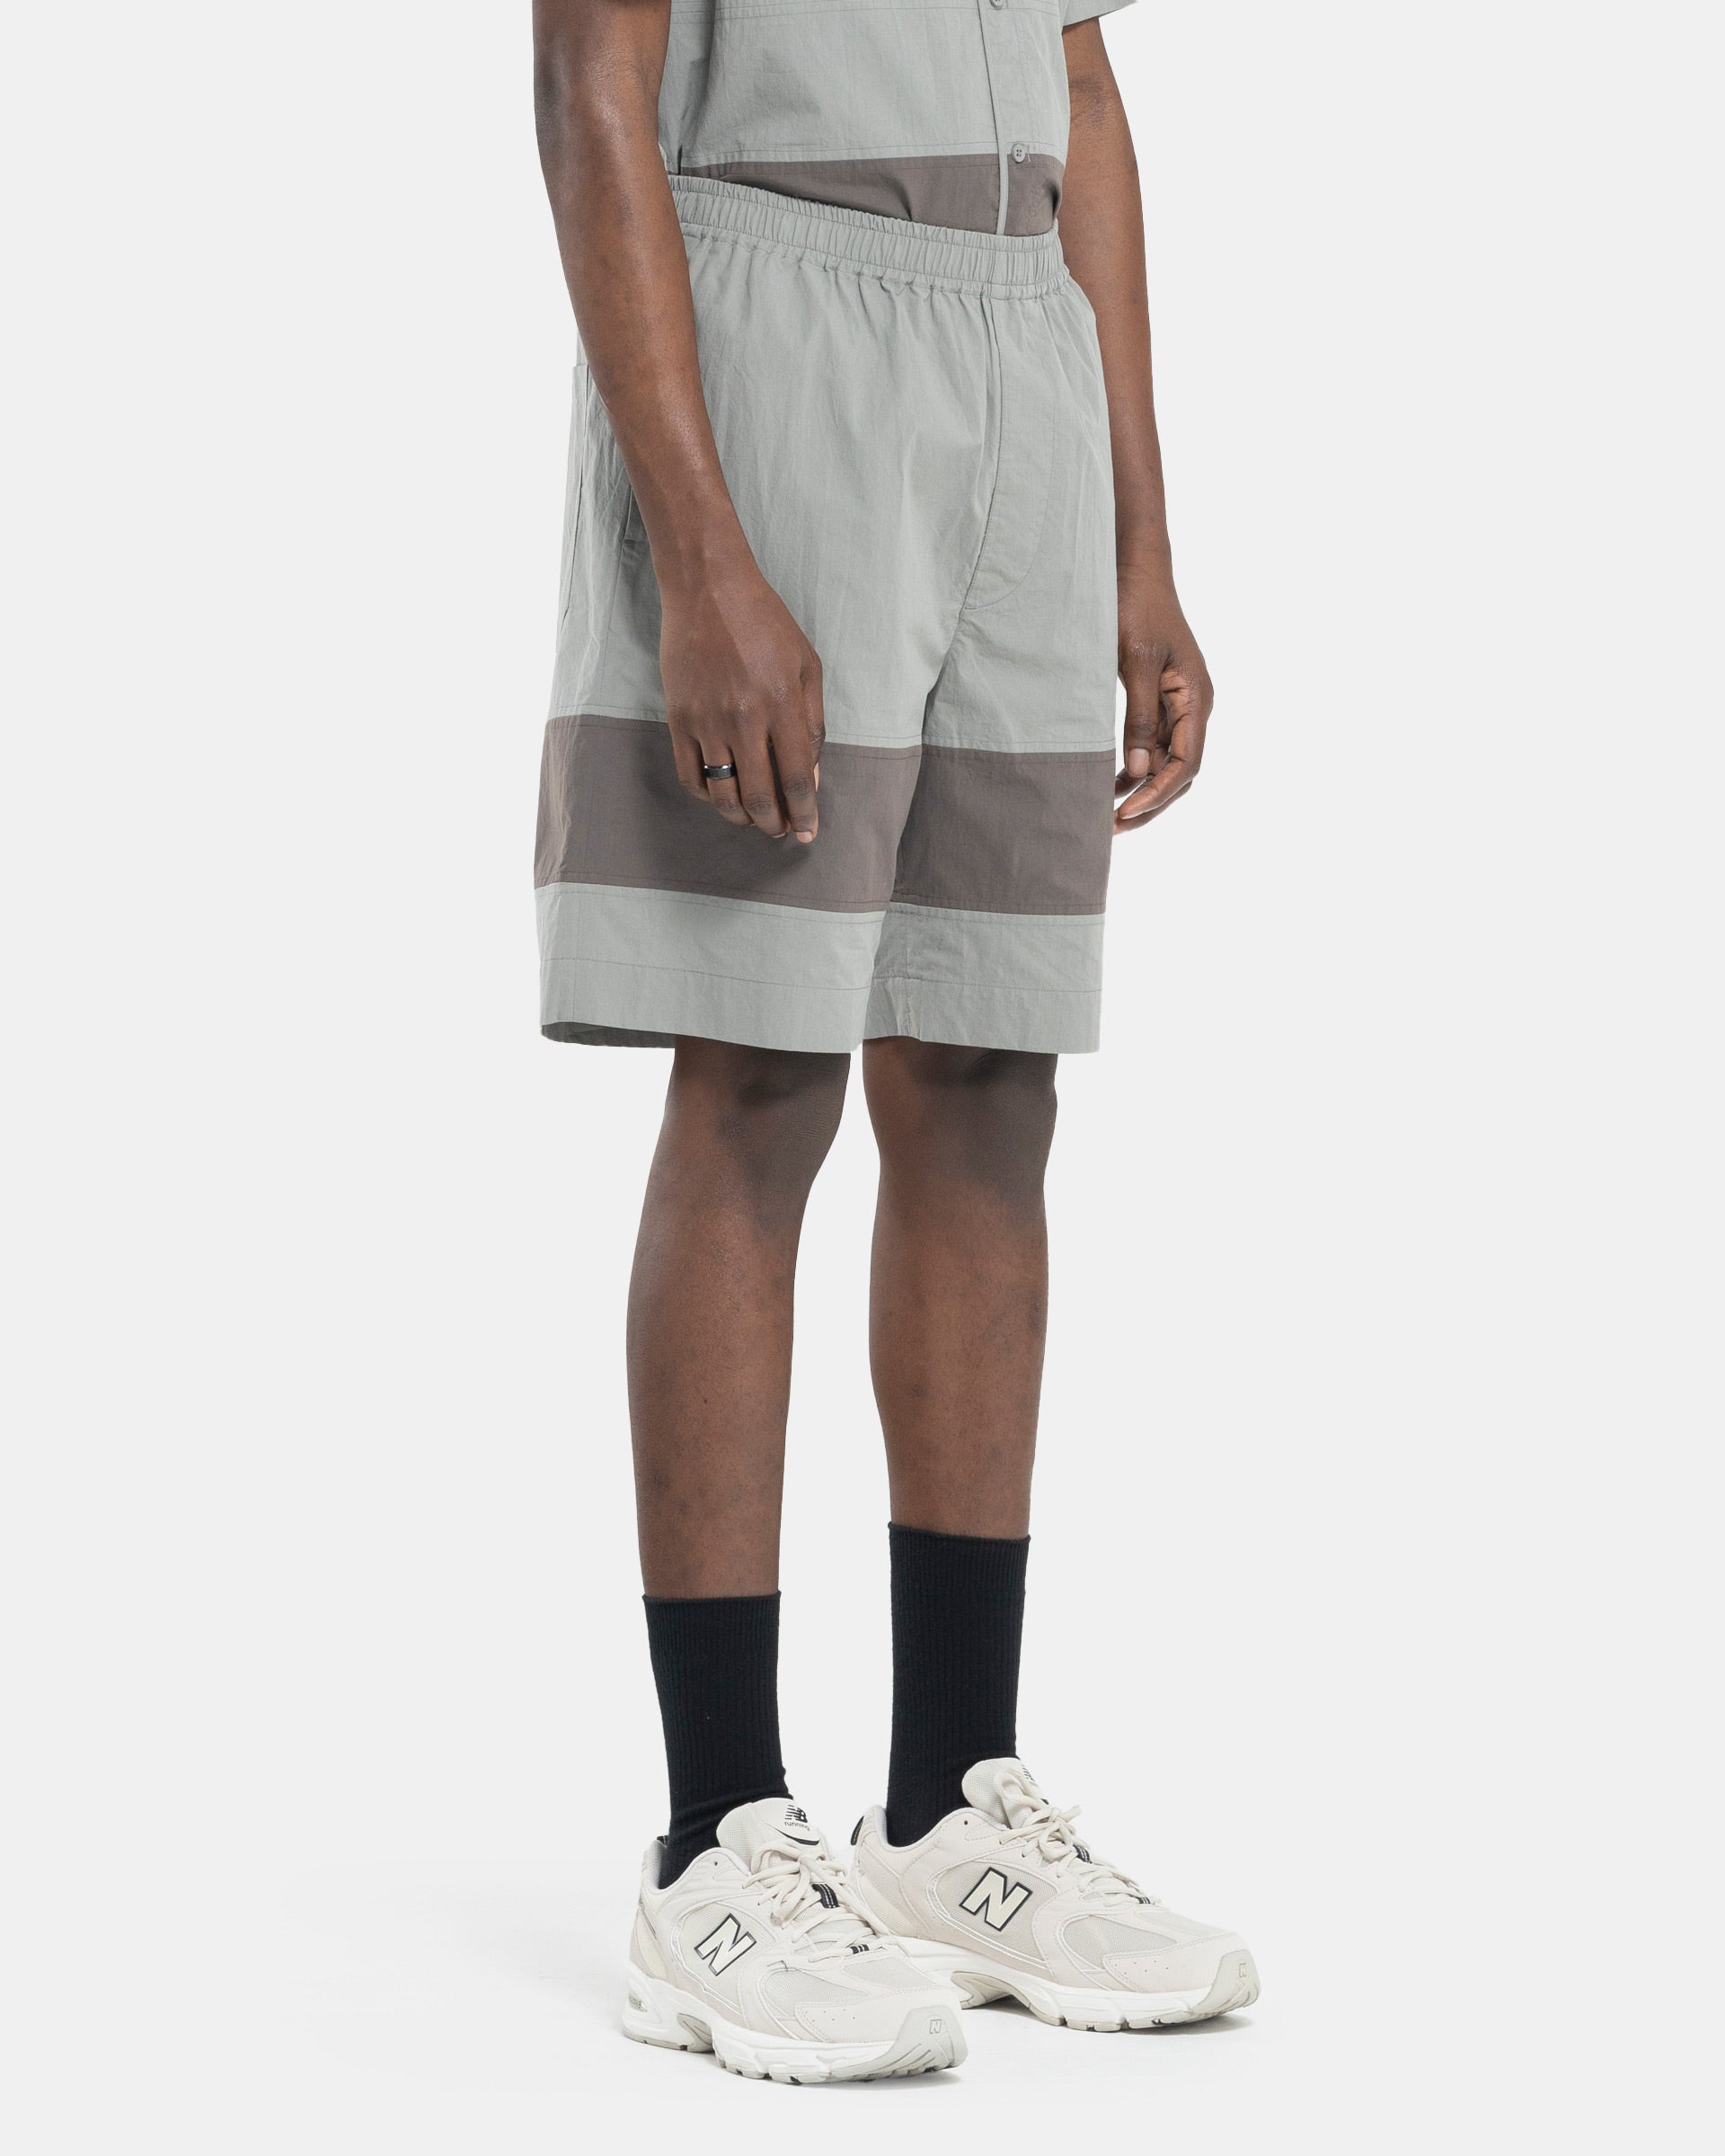 Model wearing Craig Green Barrel Shorts in Grey on white background